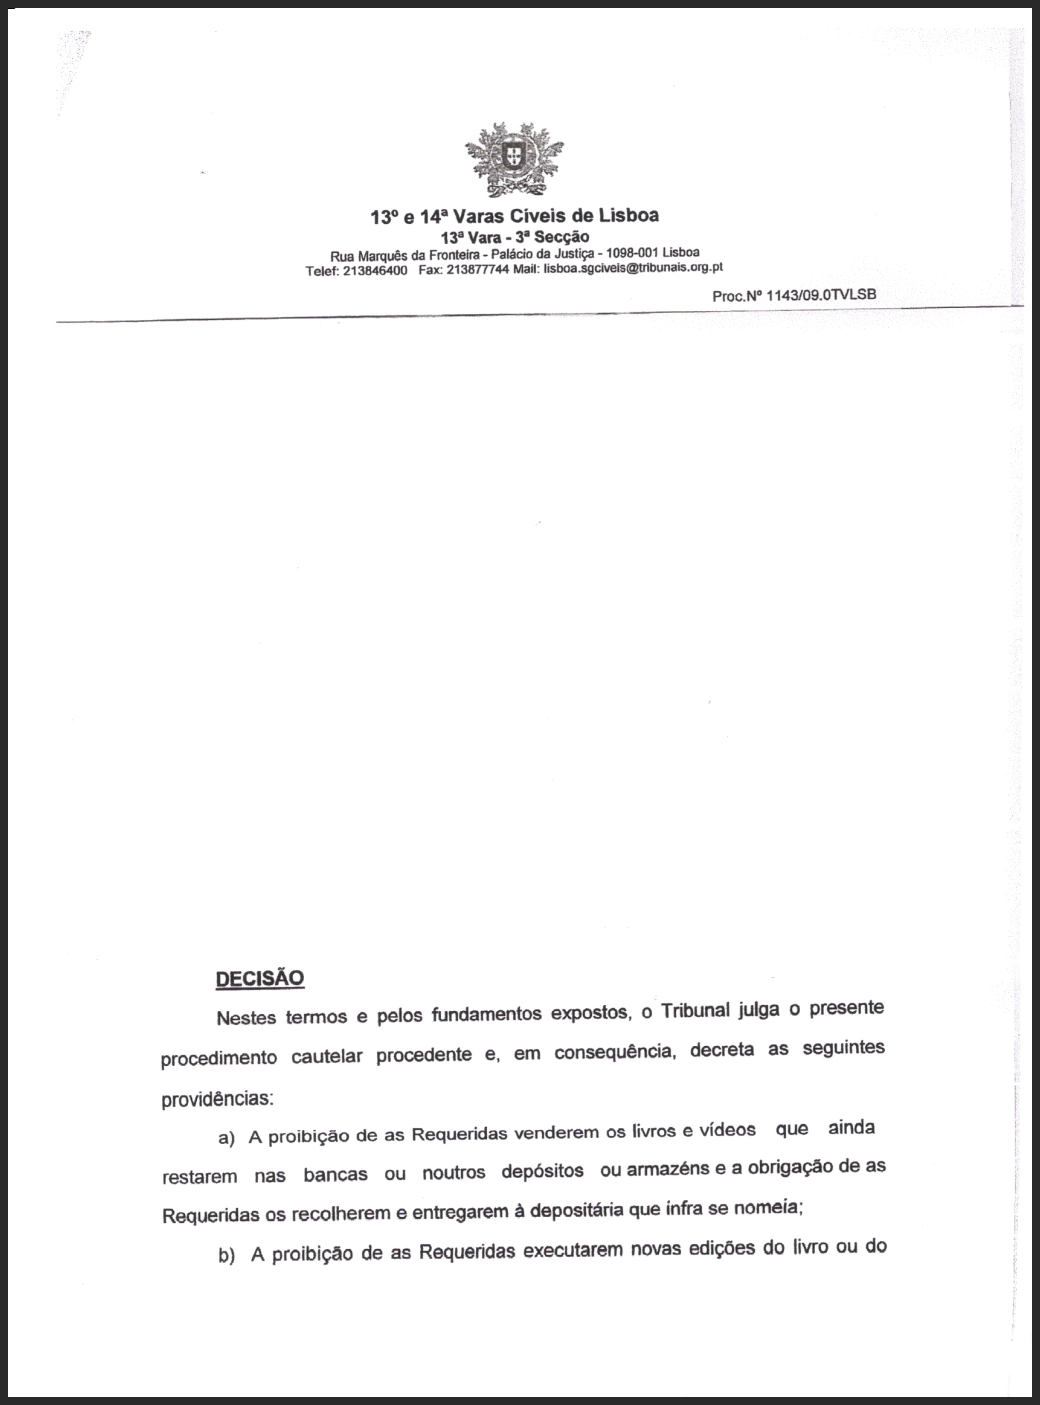 Decision of Portuguese judge, page 1